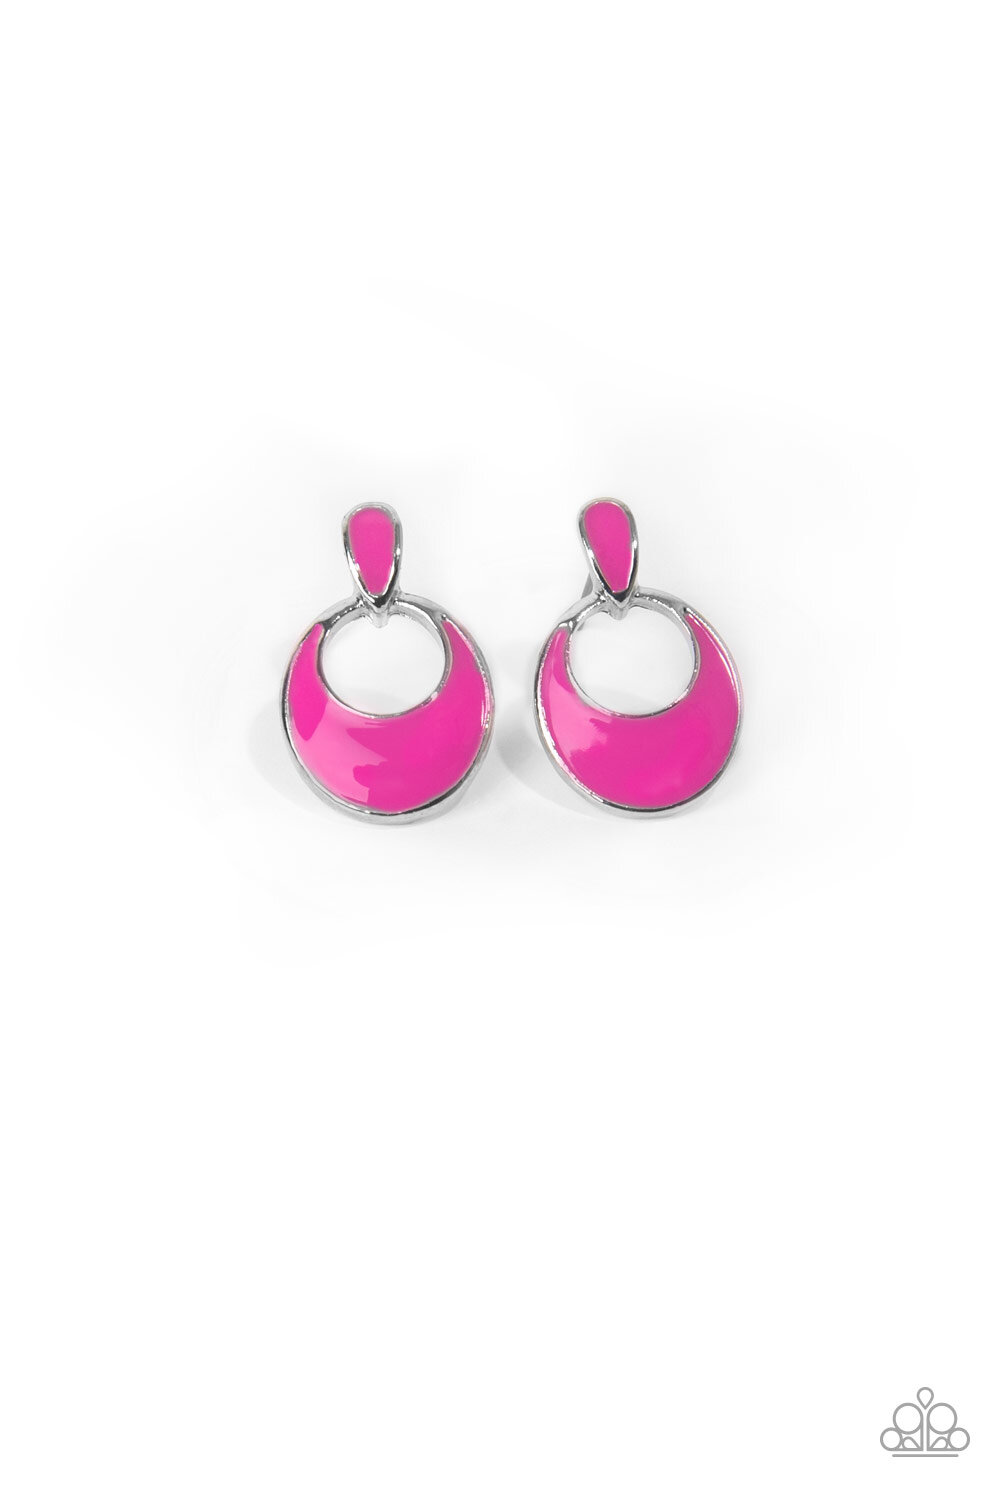 Treble Clef enamel pendant clip on earrings with rhinestone accents spring hoop